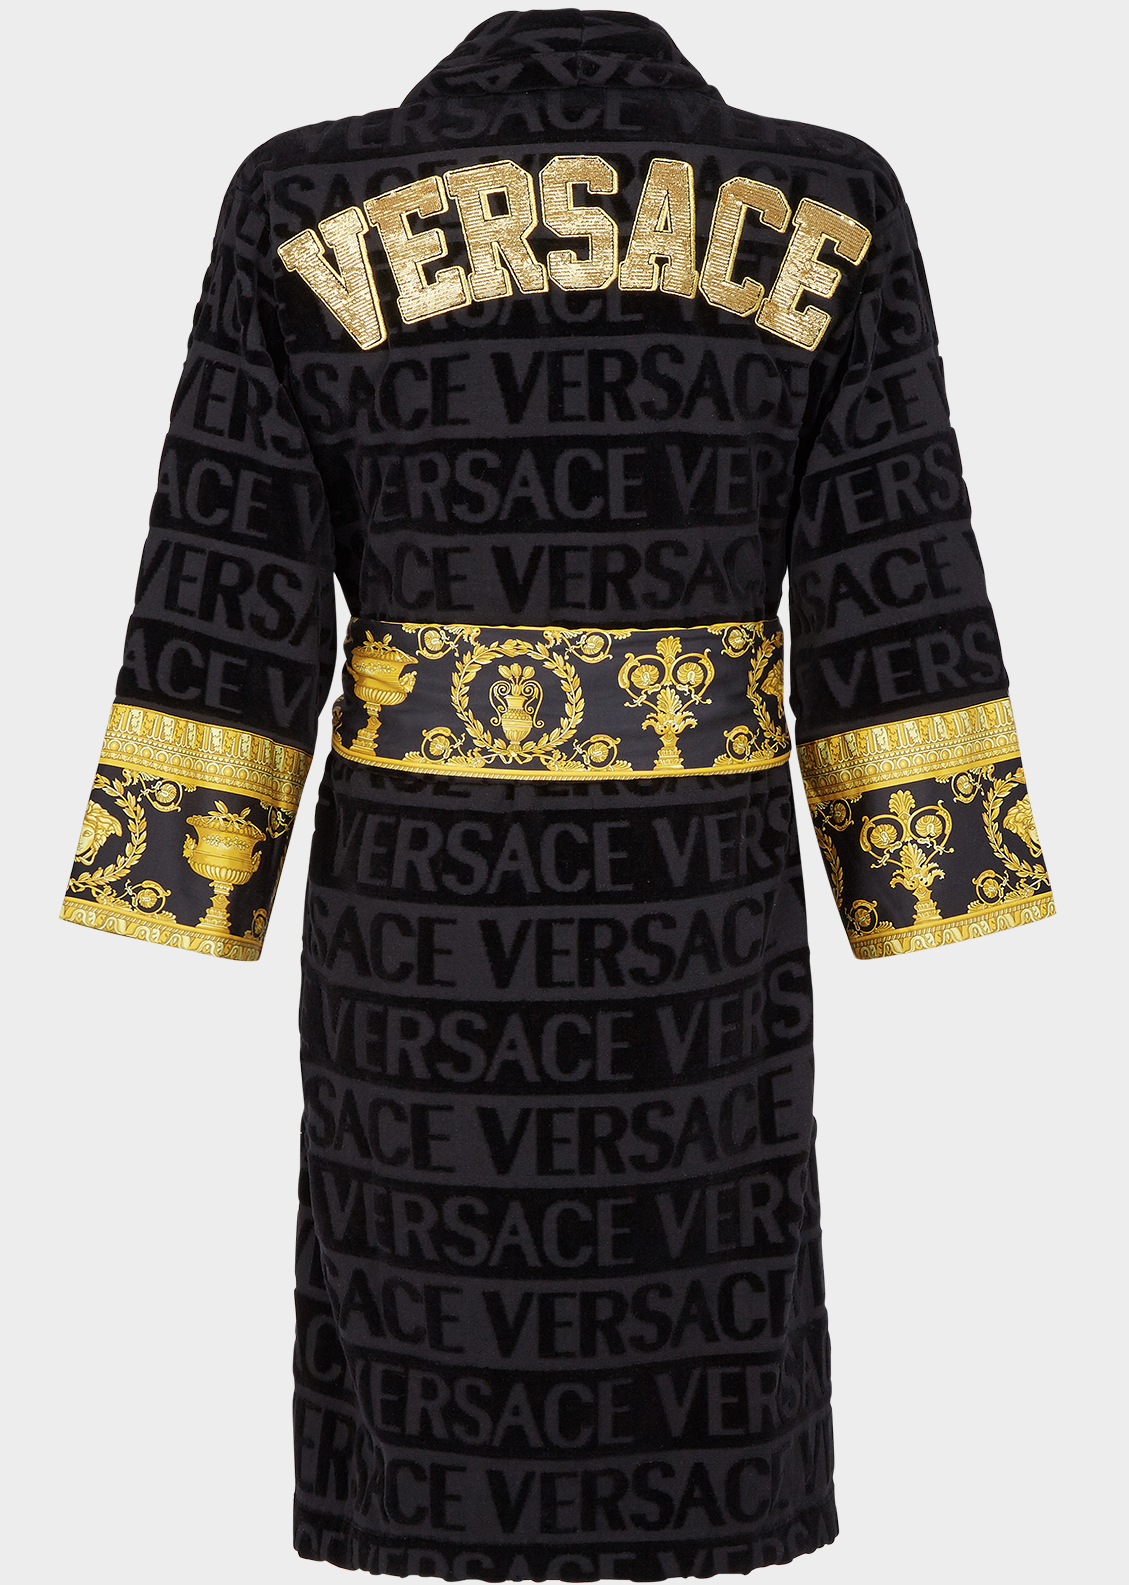 versace mens bathrobe